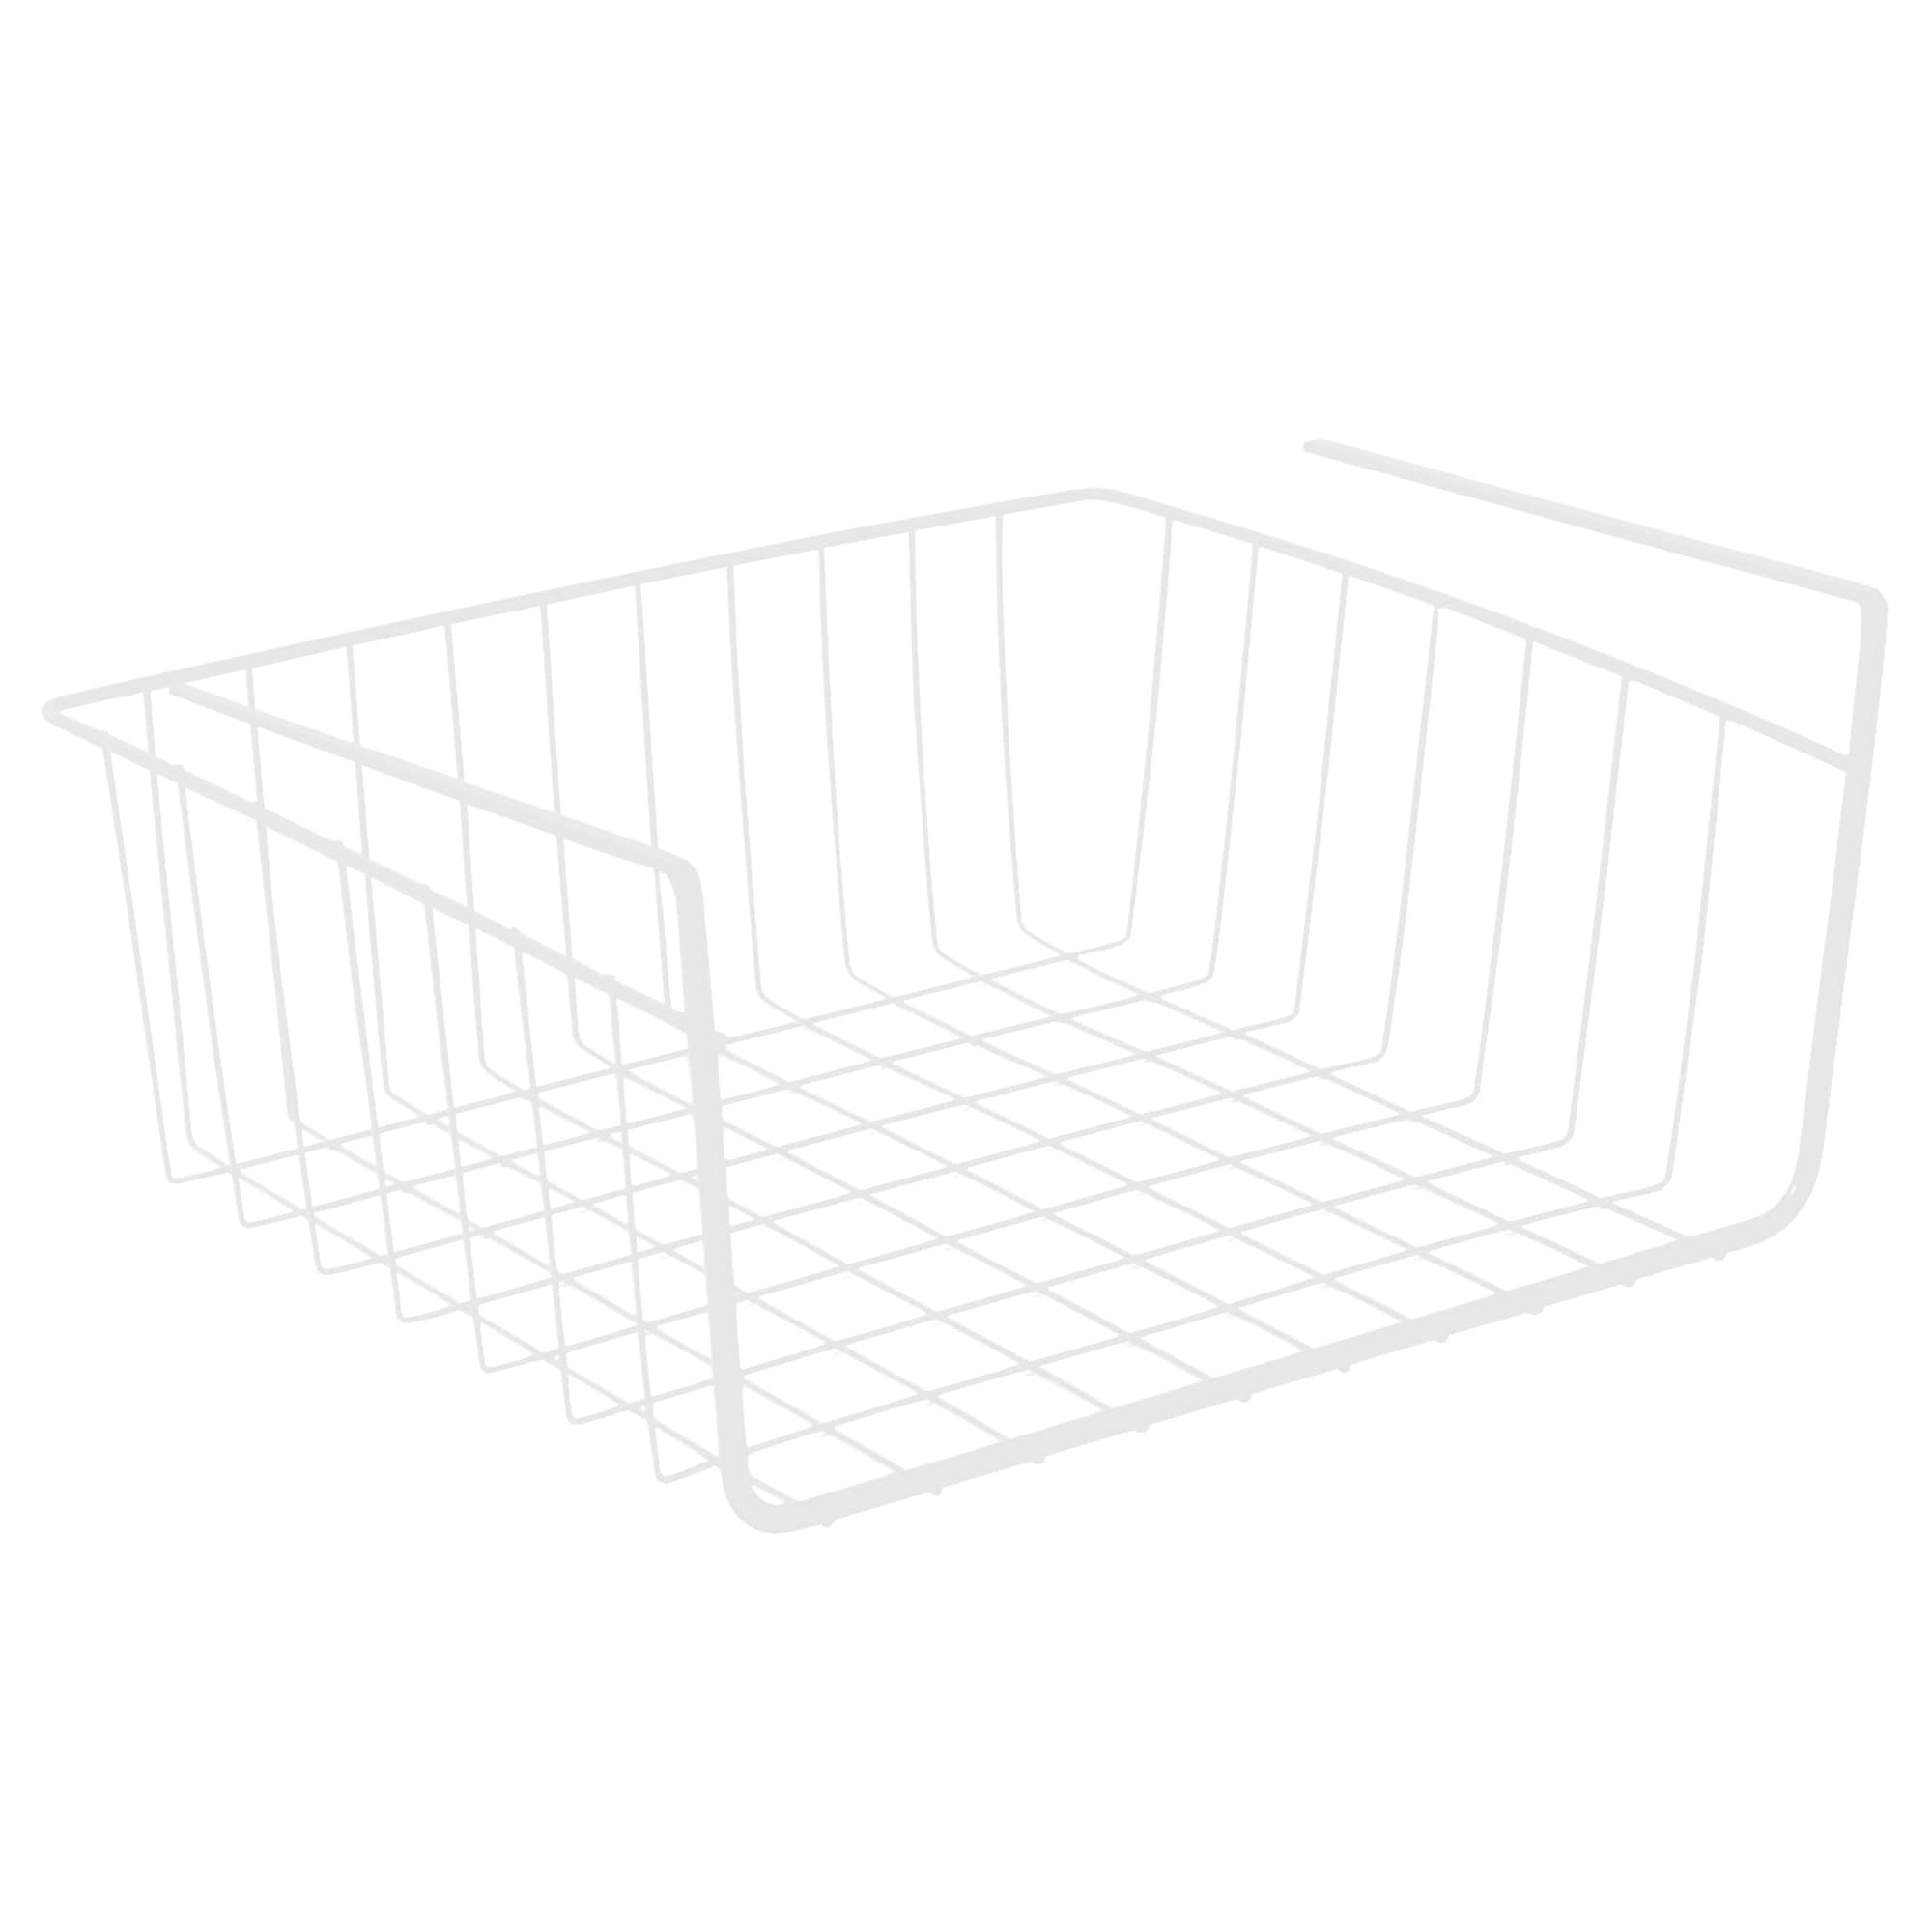 Smart Design Undershelf Storage Basket Small 12 x 5.5 in. - Light